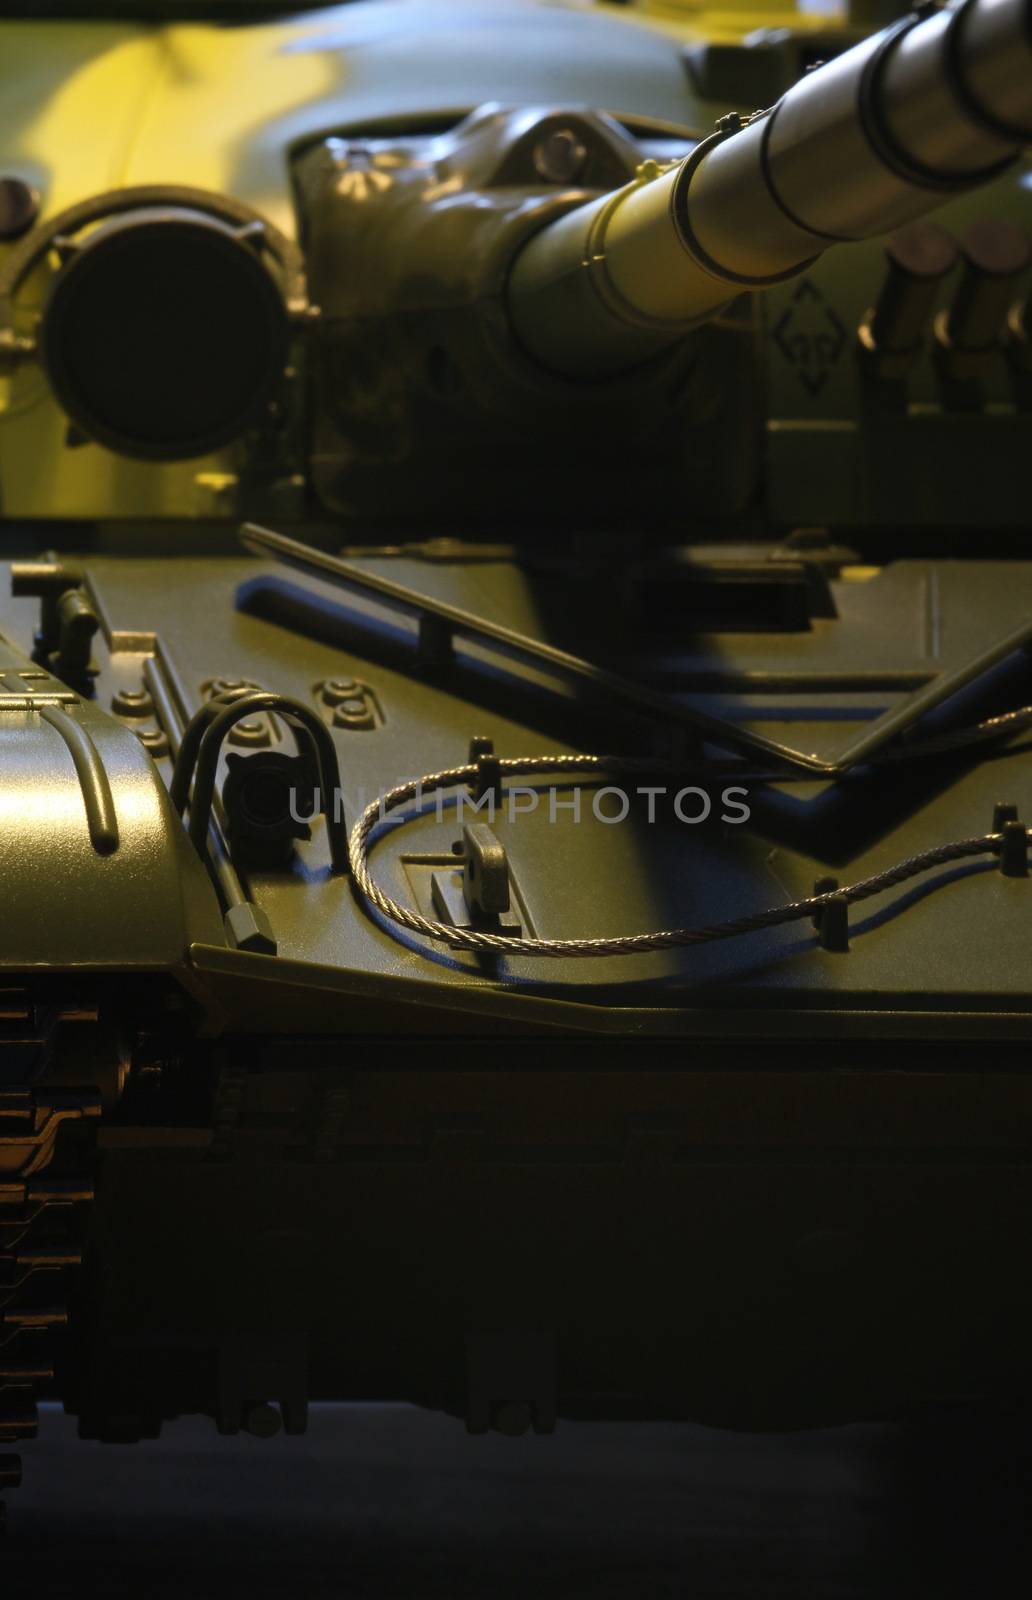 heavy armored tank by mrivserg